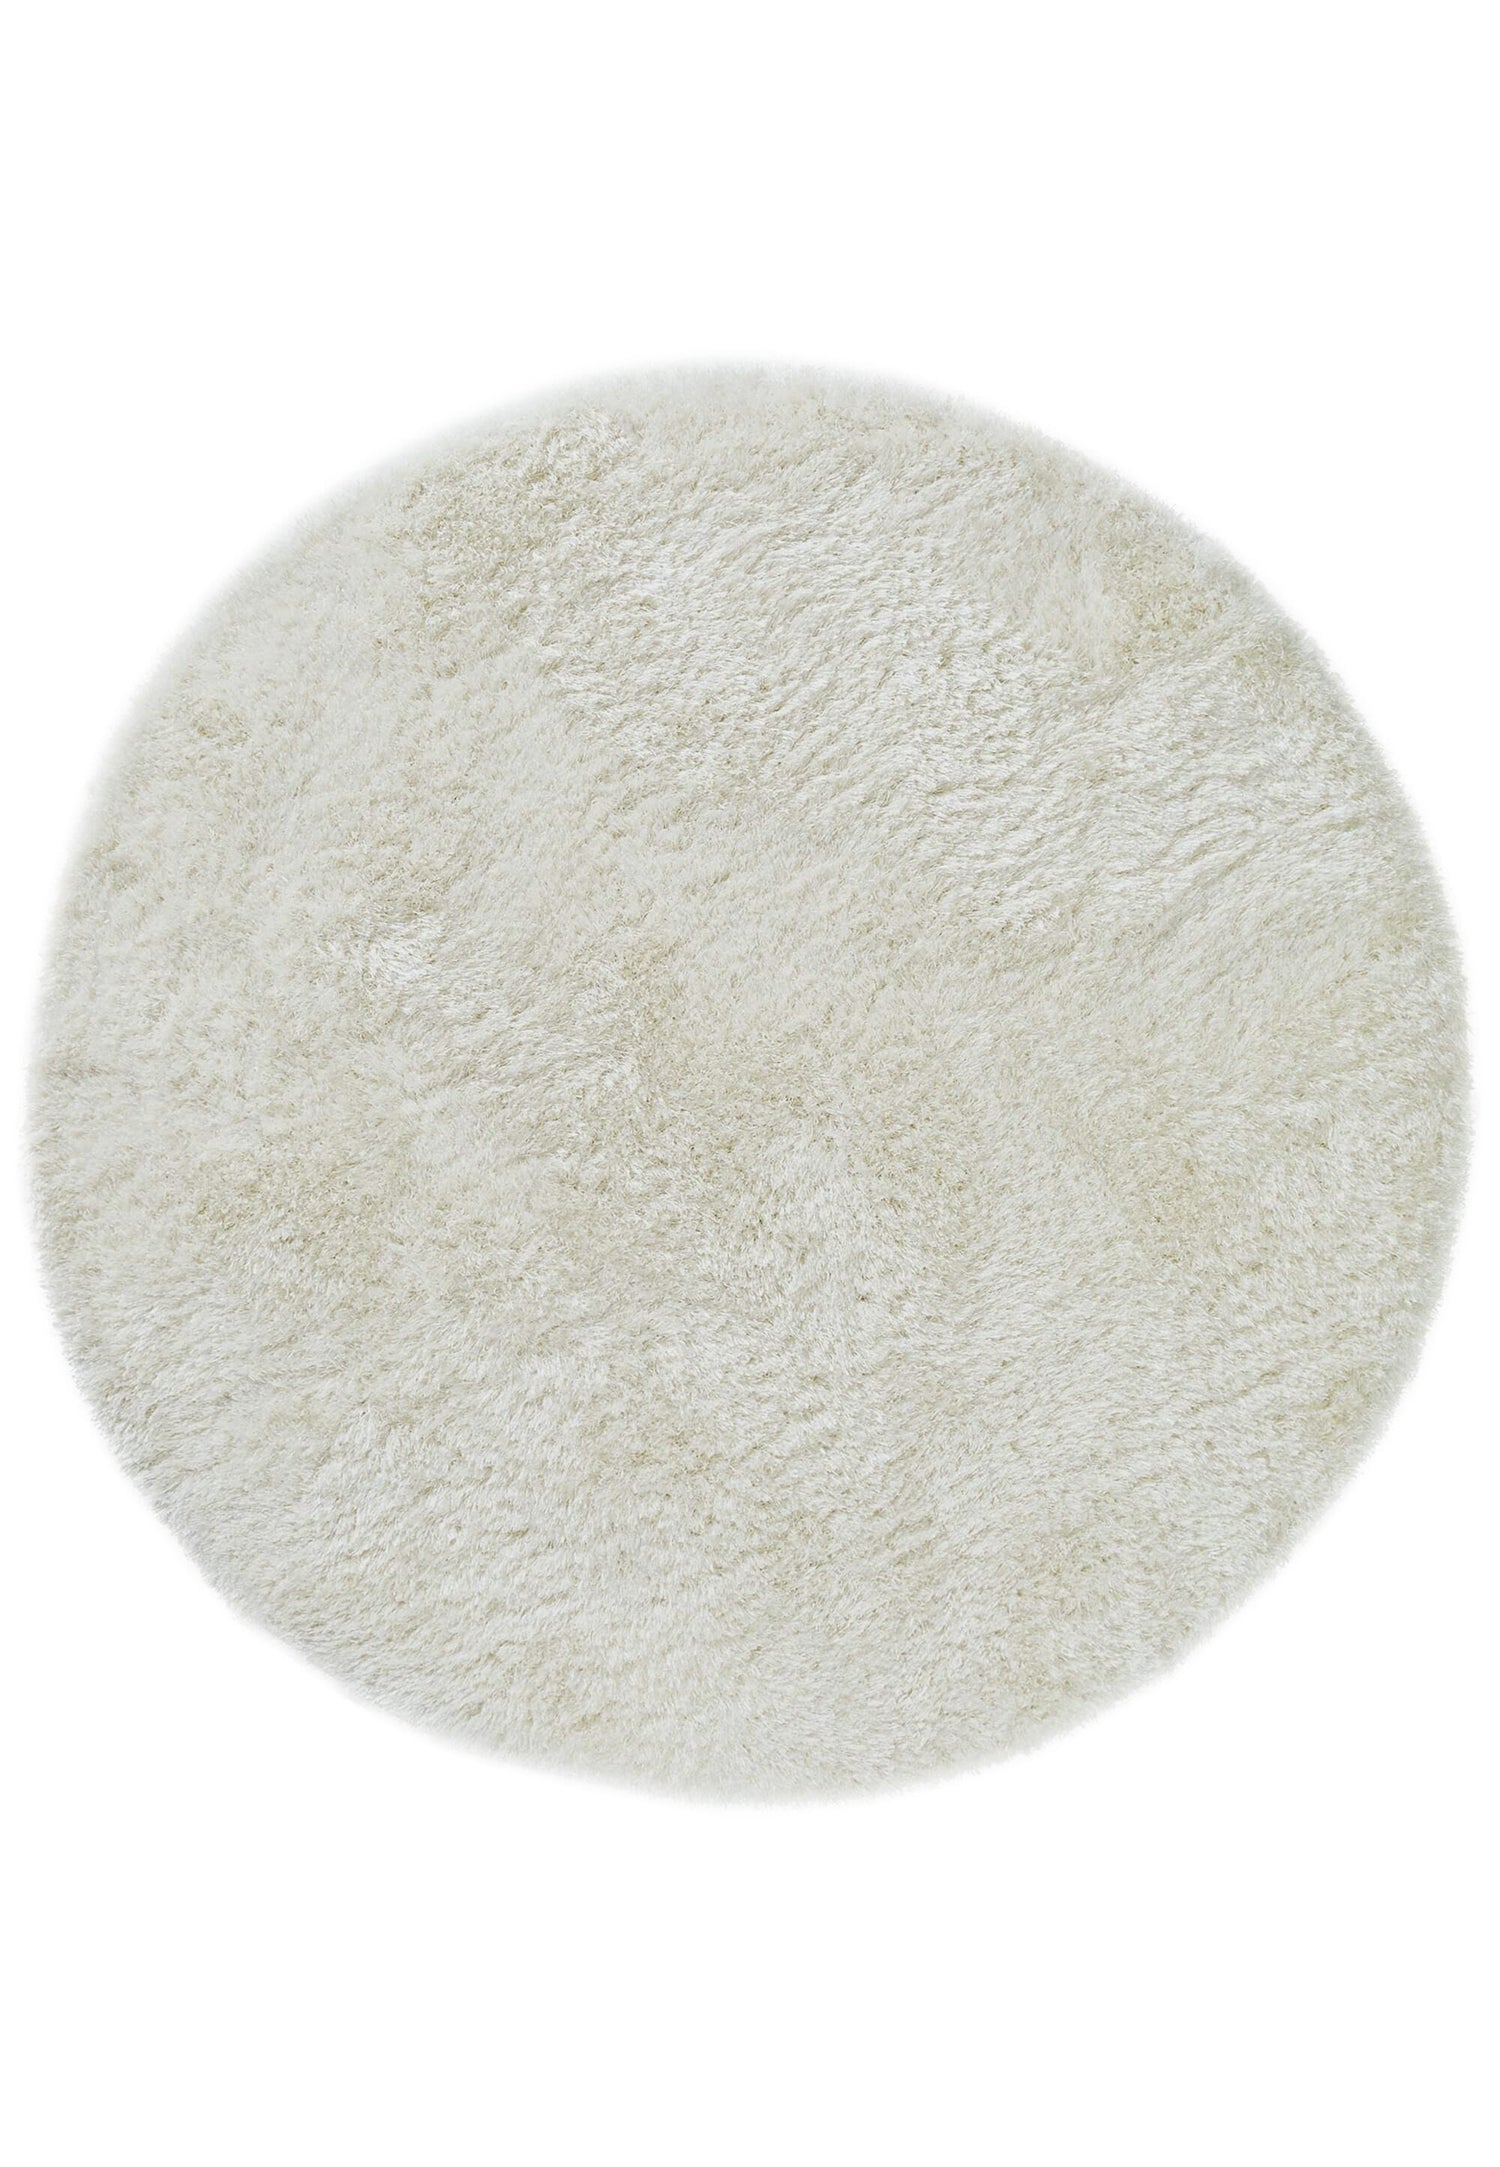  Asiatic Carpets-Asiatic Carpets Plush Hand Woven Rug White - 140 x 200cm-Cream, White 621 